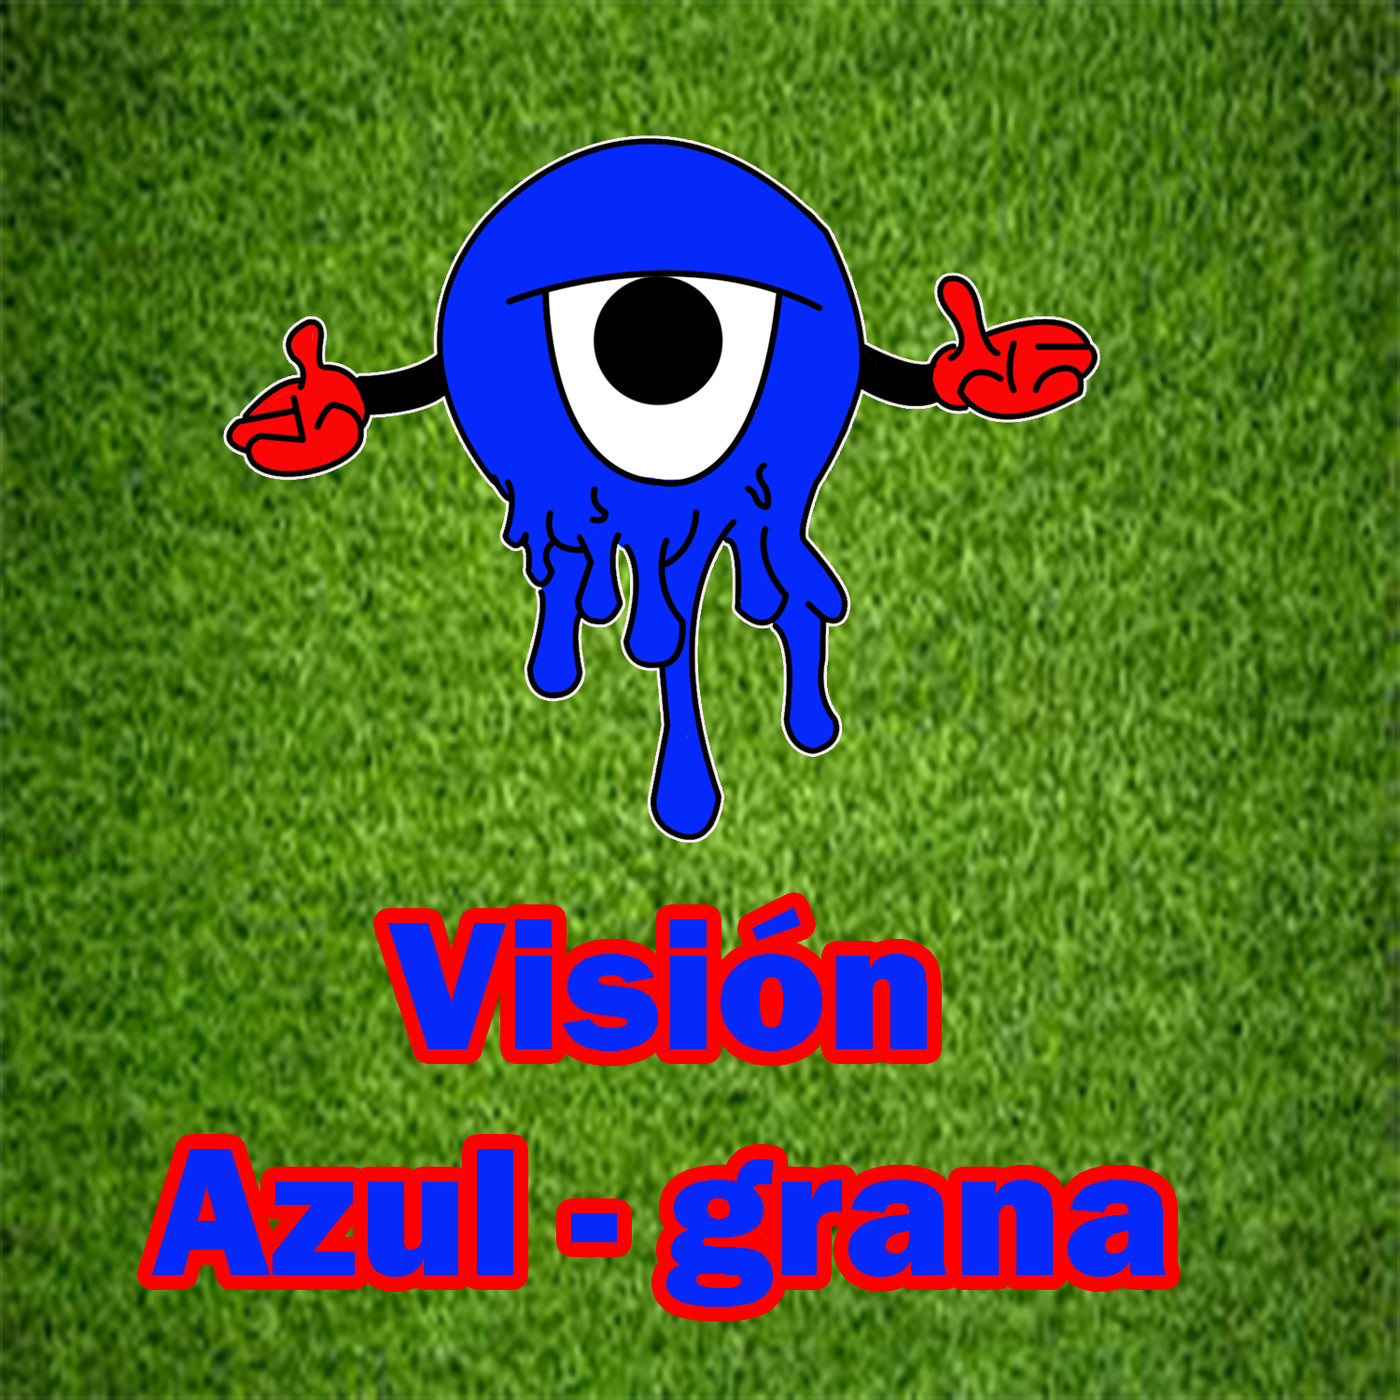 Vision azul-grana